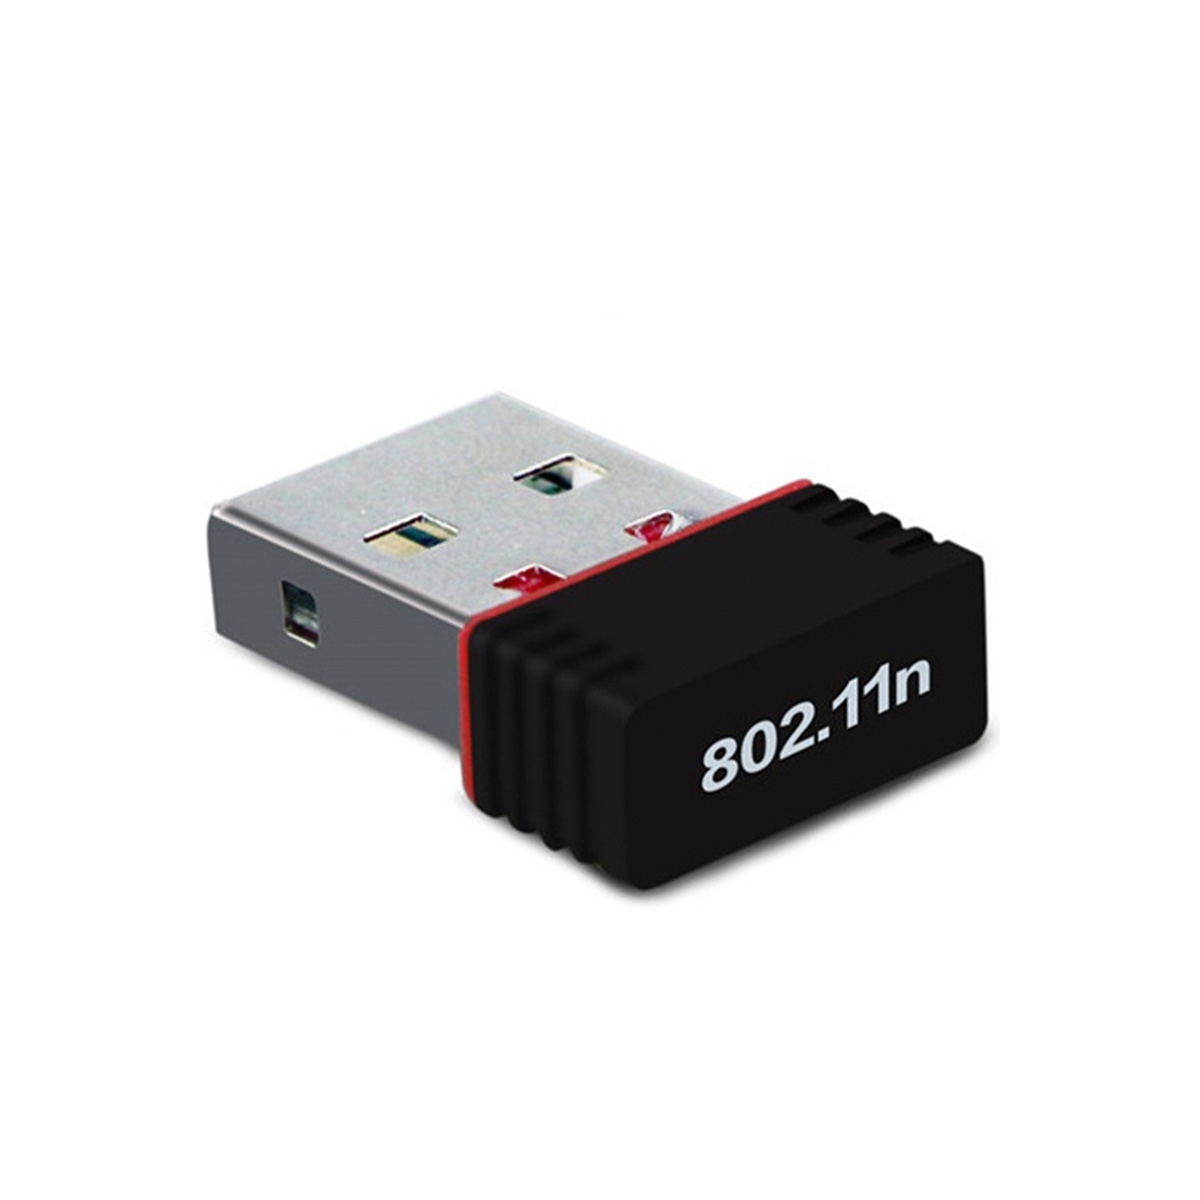 Adaptador USB Wifi 802.11N - MegaSystem Tienda